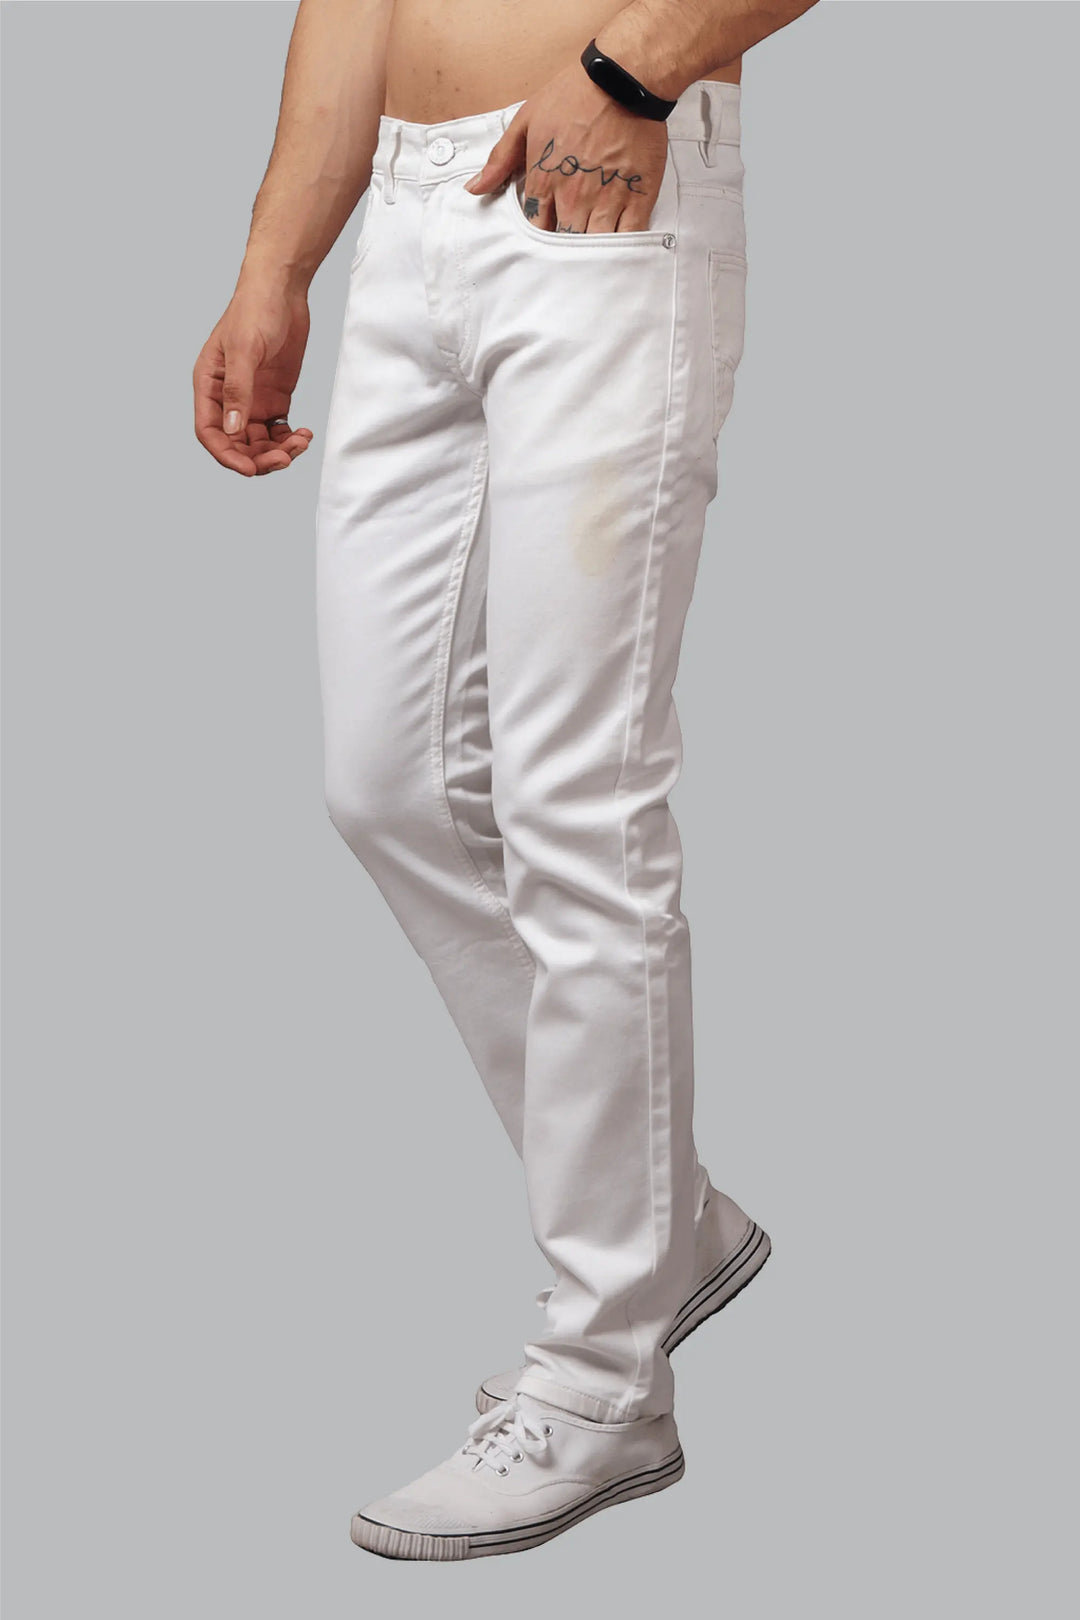 Slim Fit White Premium Men's Denim Jeans - Peplos Jeans 